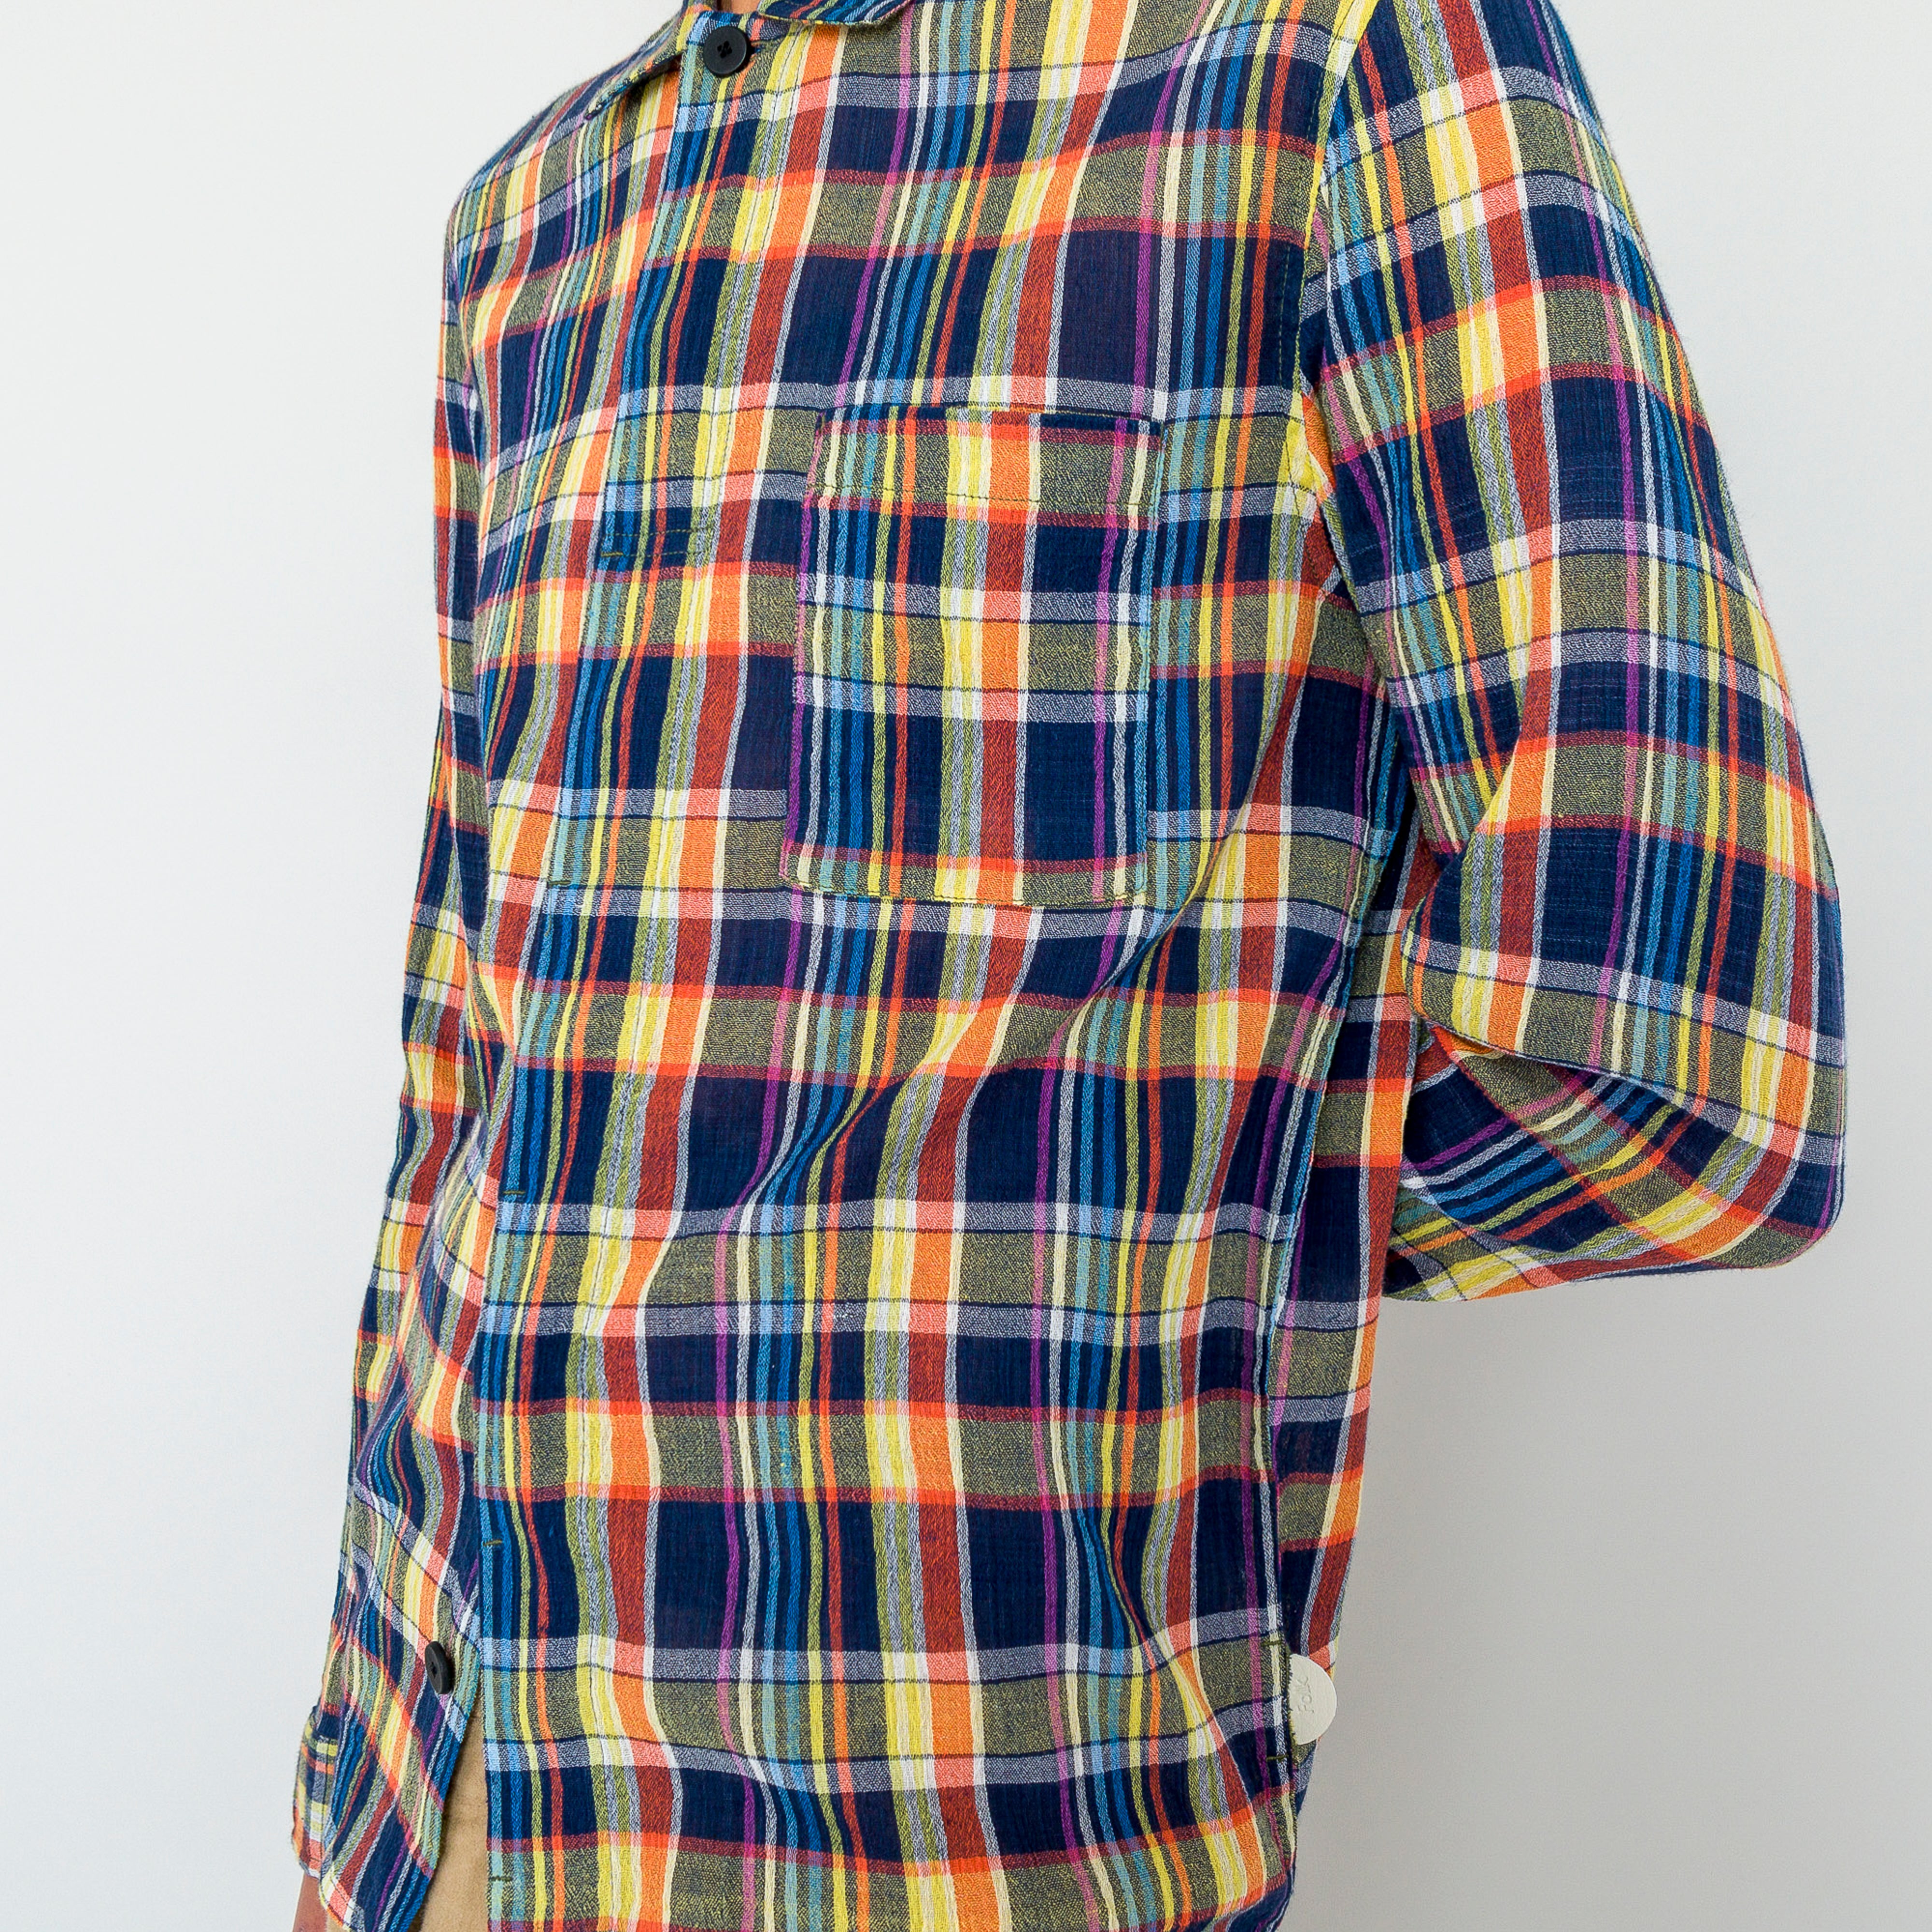 Folk | Patch Shirt - Navy Multicolour Check